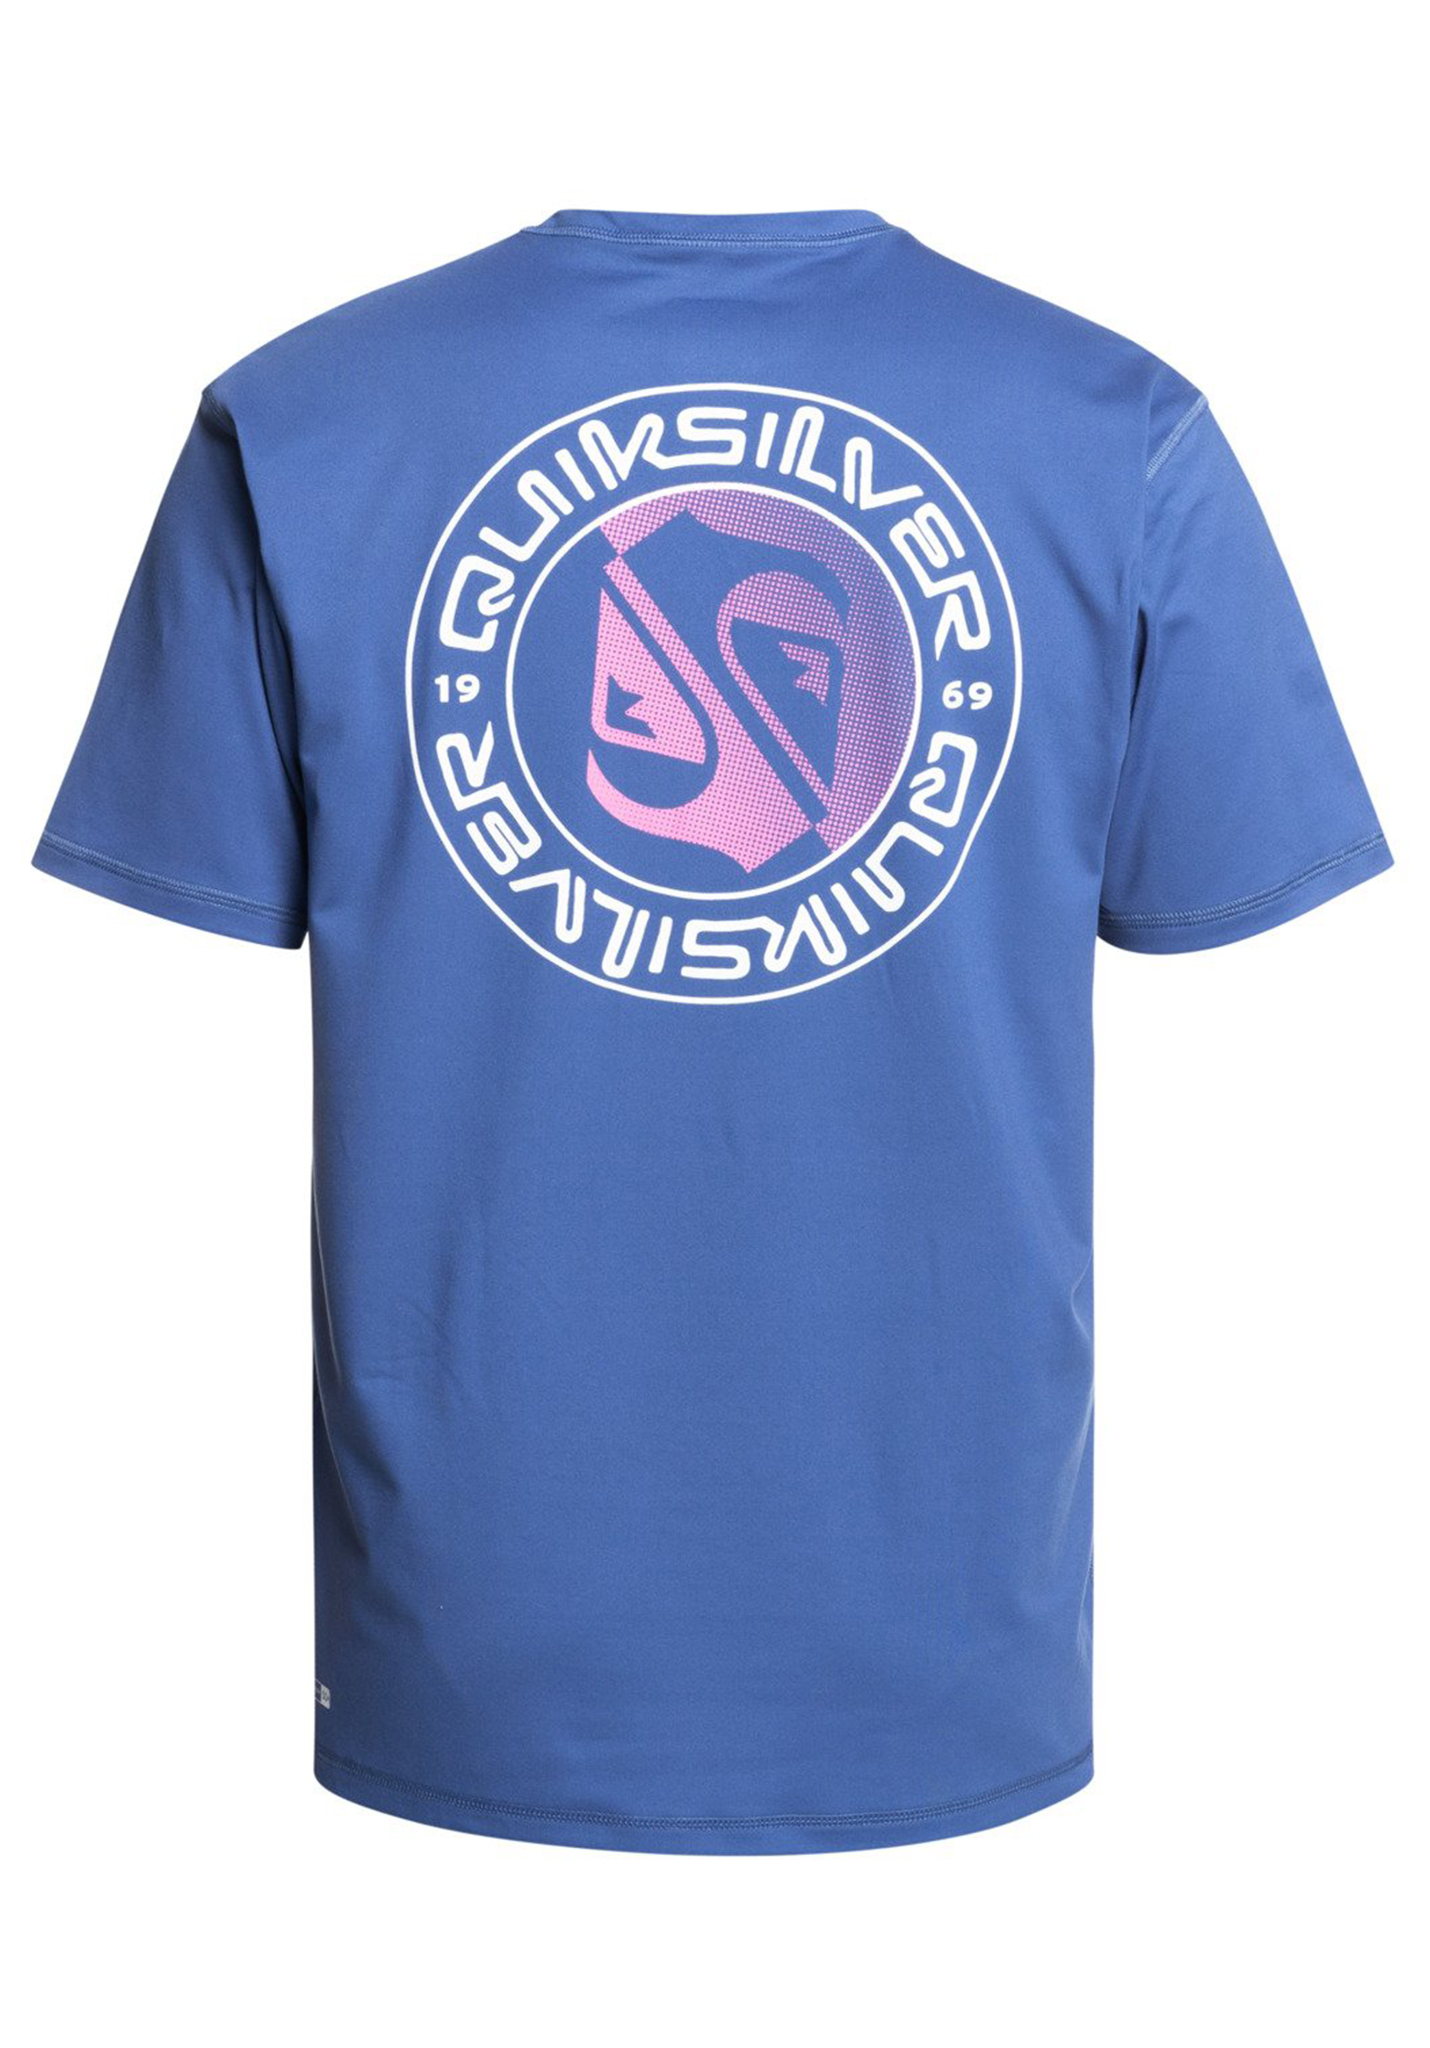 Quiksilver Mystic Session S/S T-Shirt marineblau XXL